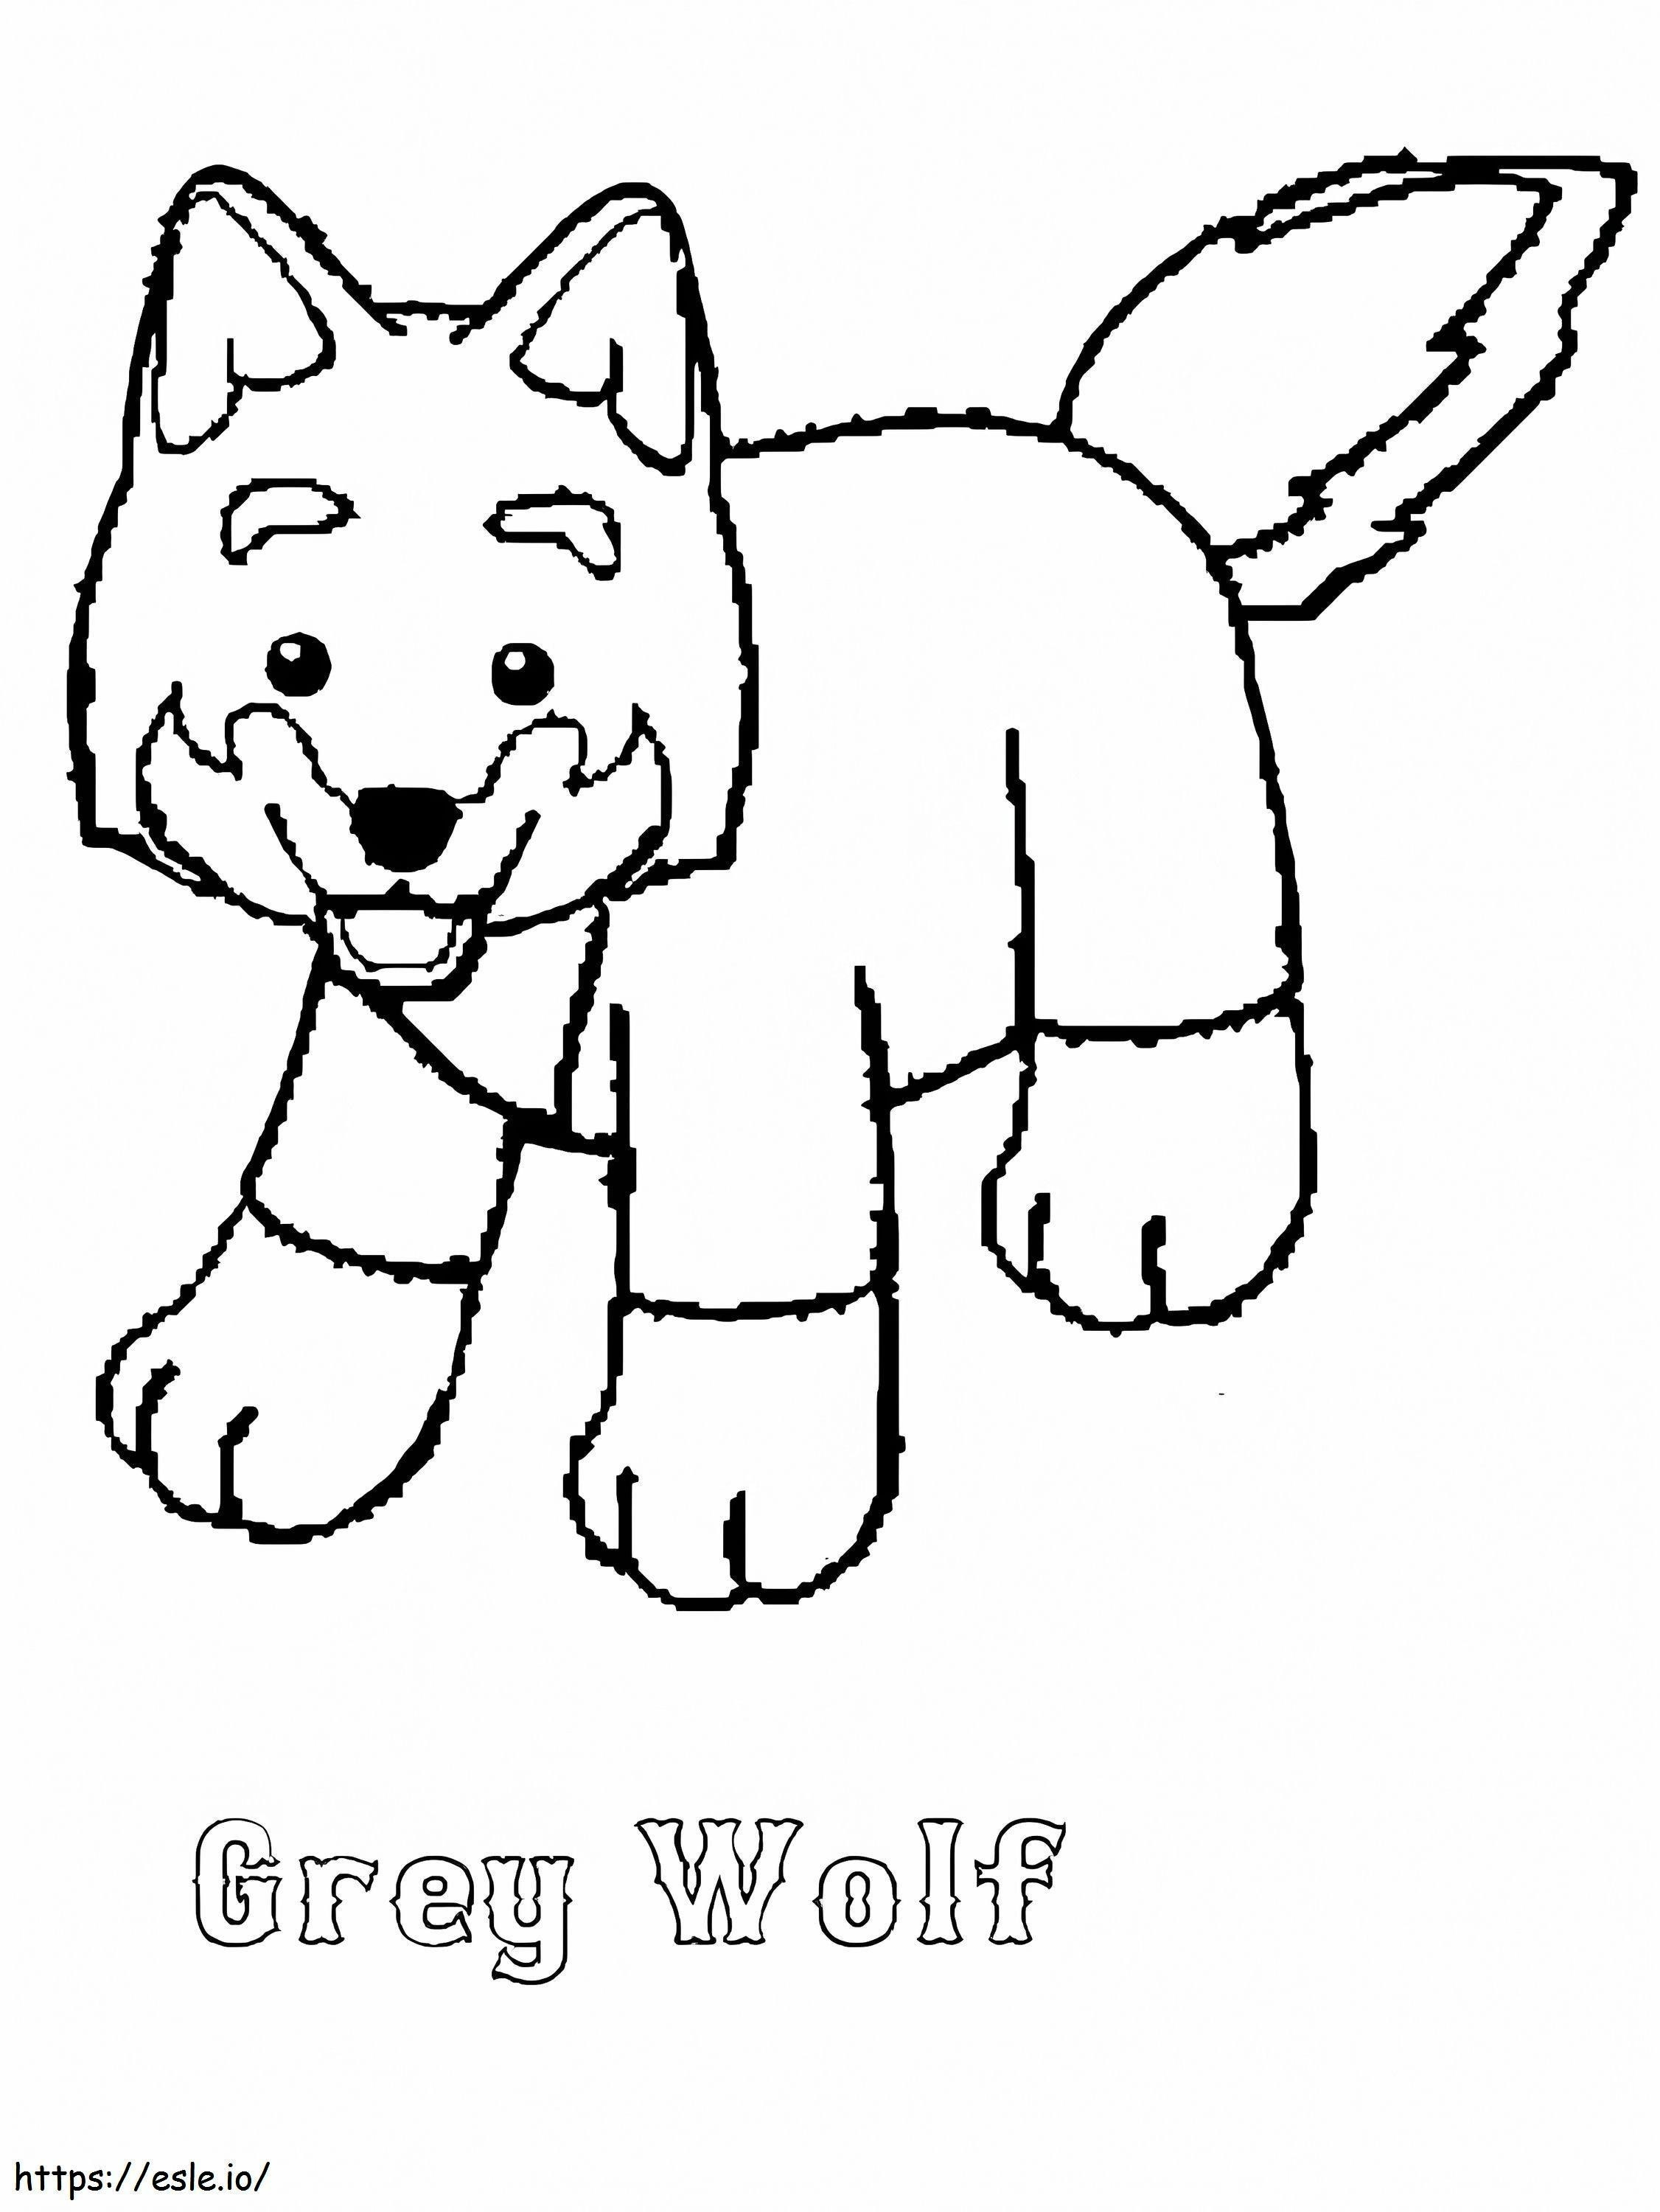 Grey Wolf Webkinz coloring page